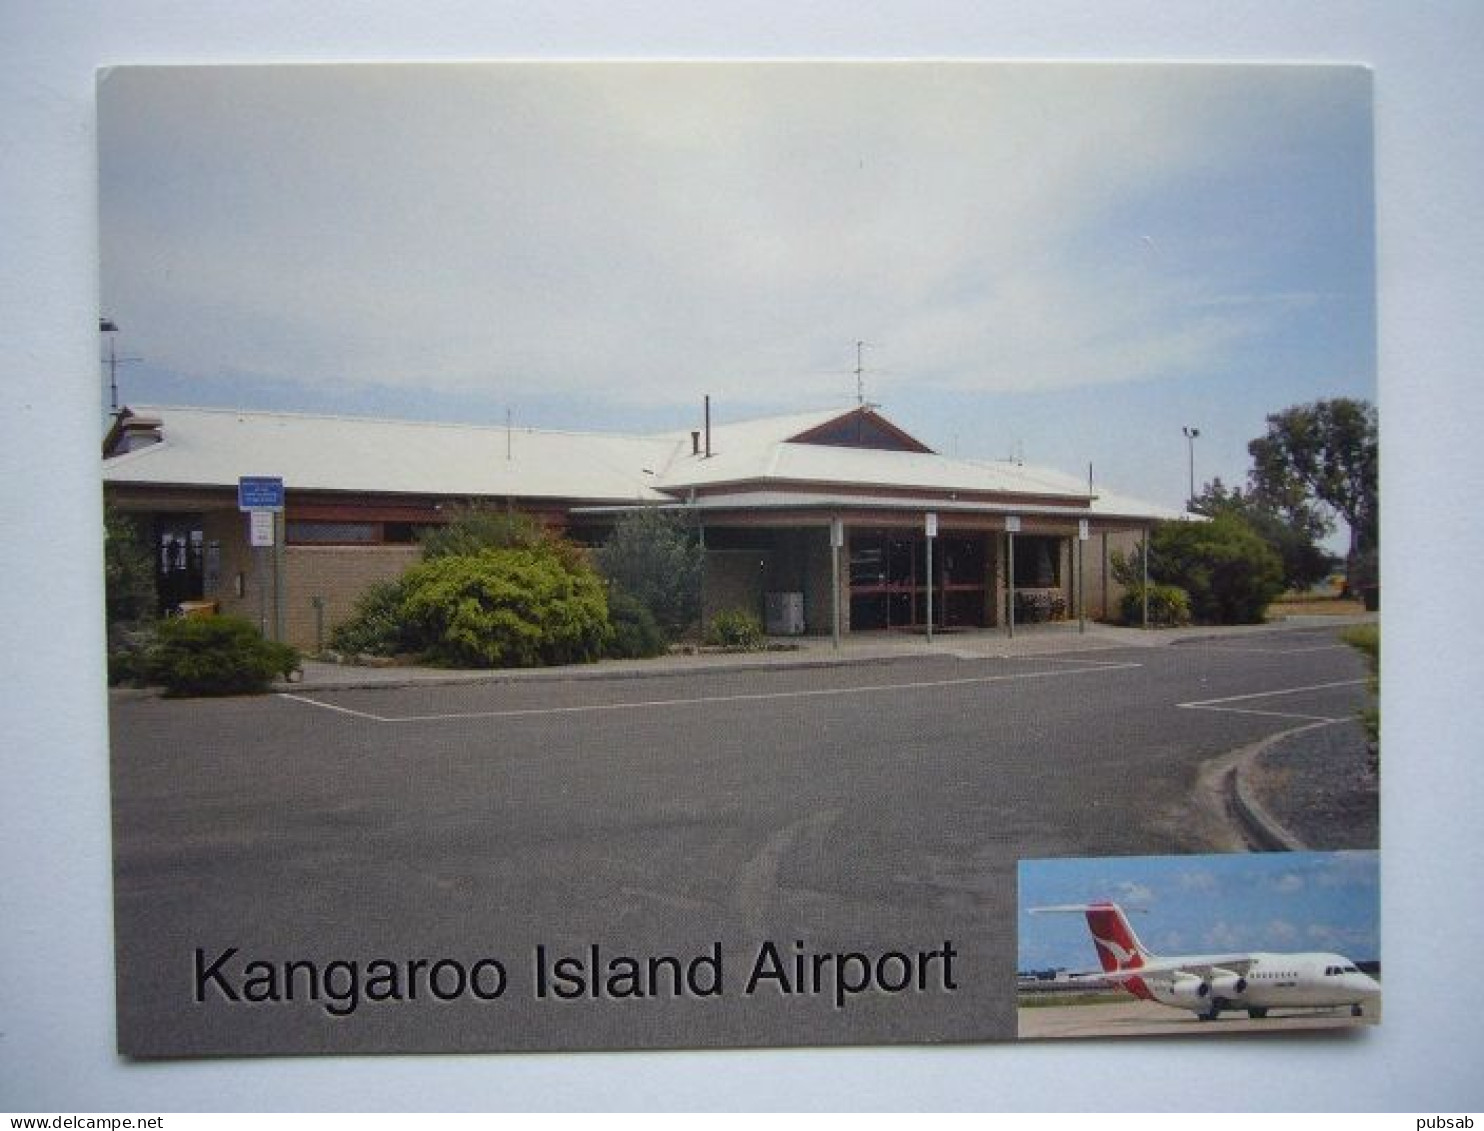 Avion / Airplane / Kangaroo Island Airport / Aéroport / Flughafen - Aerodrome